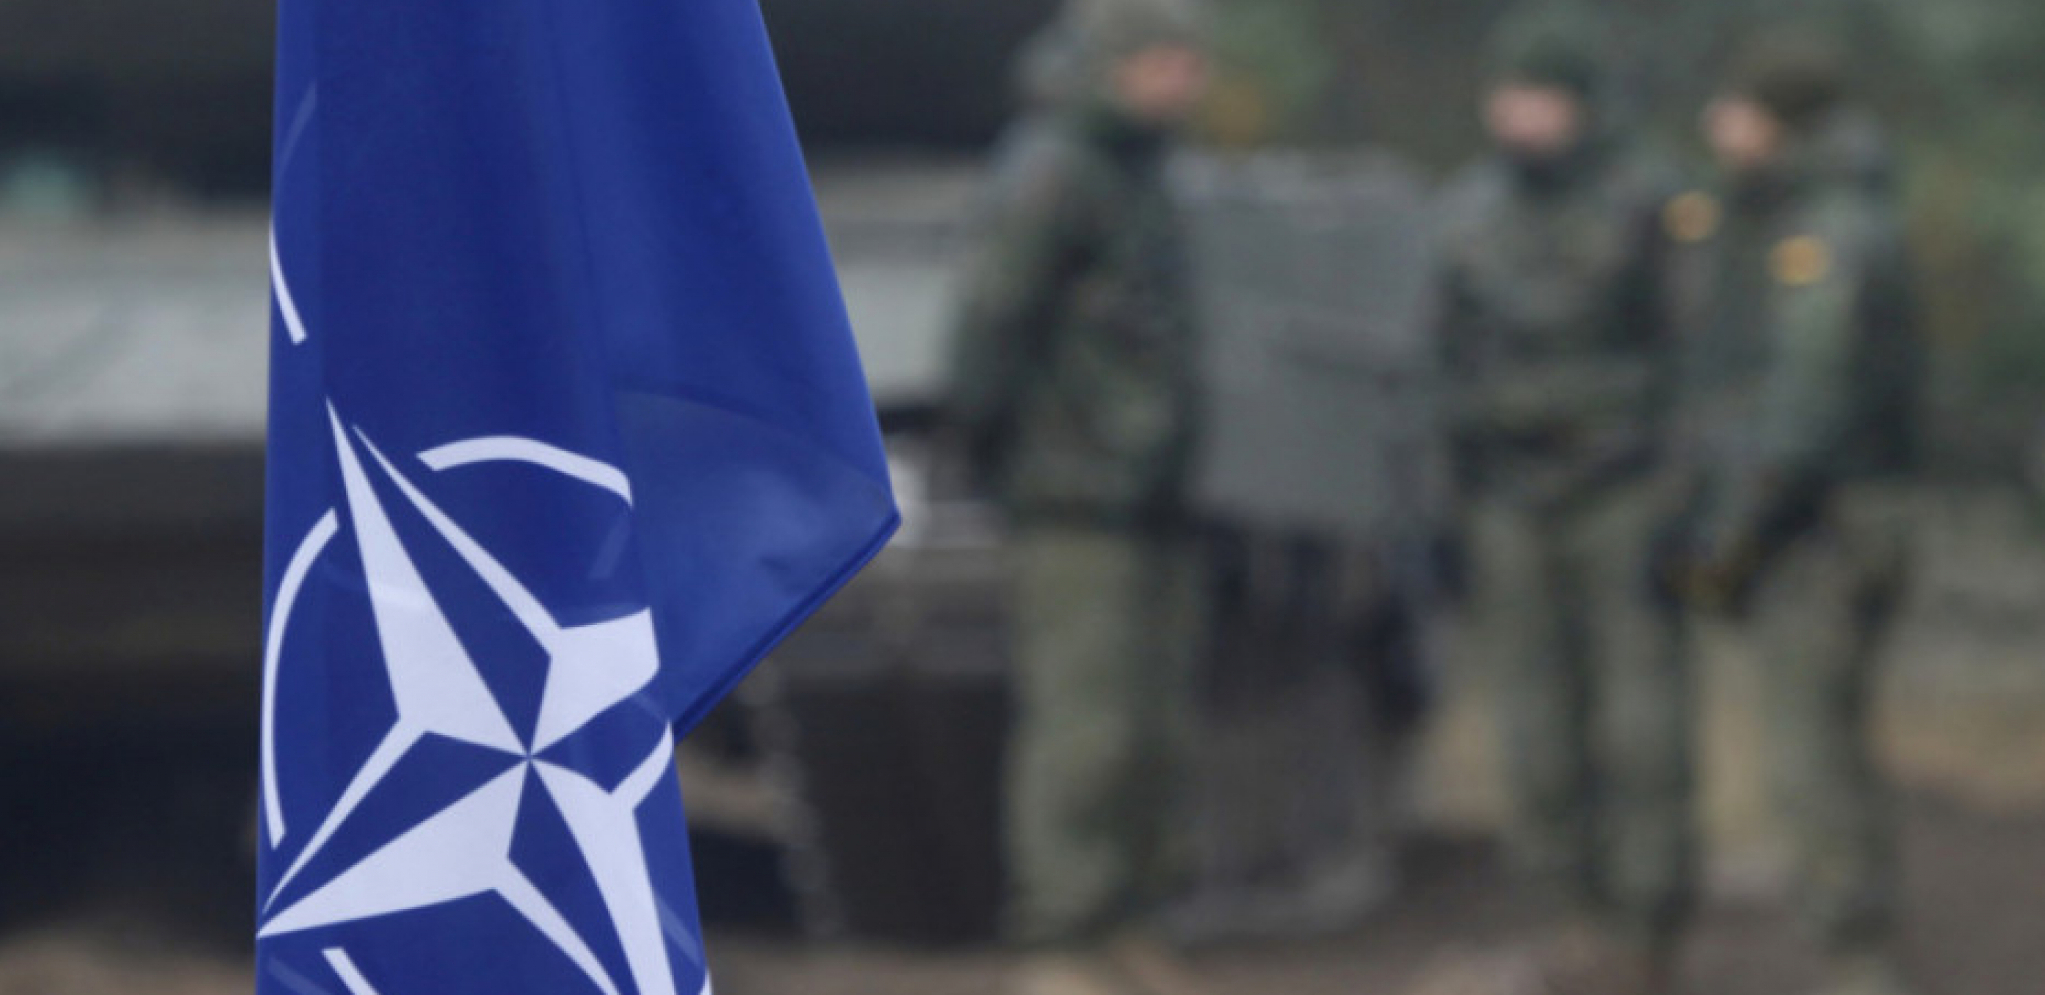 NATO IMA PAKLENI PLAN ZA RUSE Strategija se zove "Regionalni planovi"